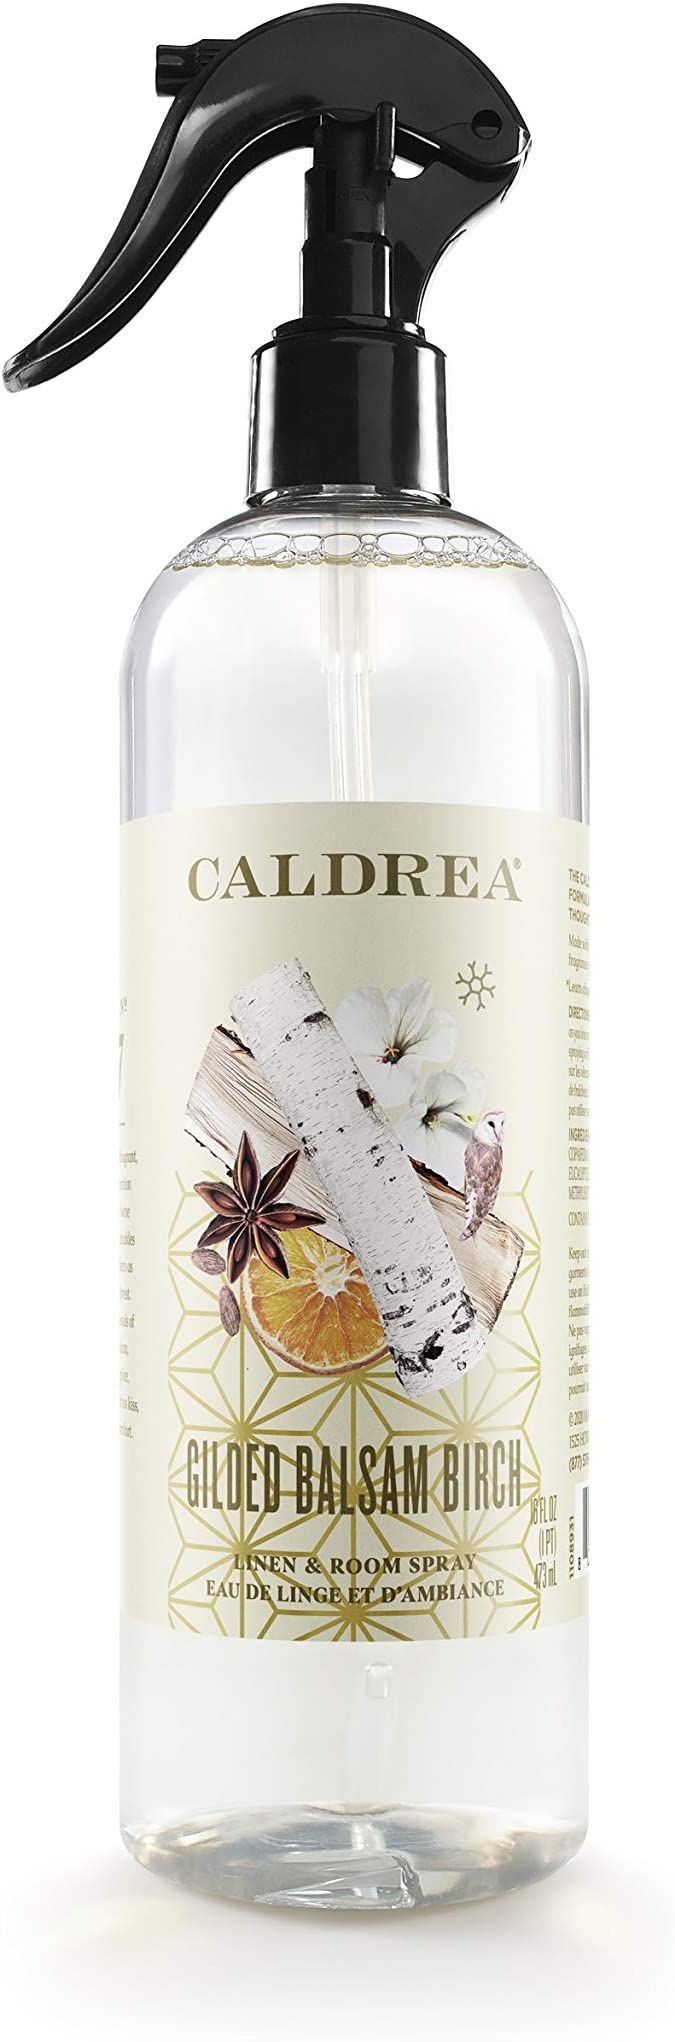 Caldrea Gilded Balsam Birch Home Fragrance Spray